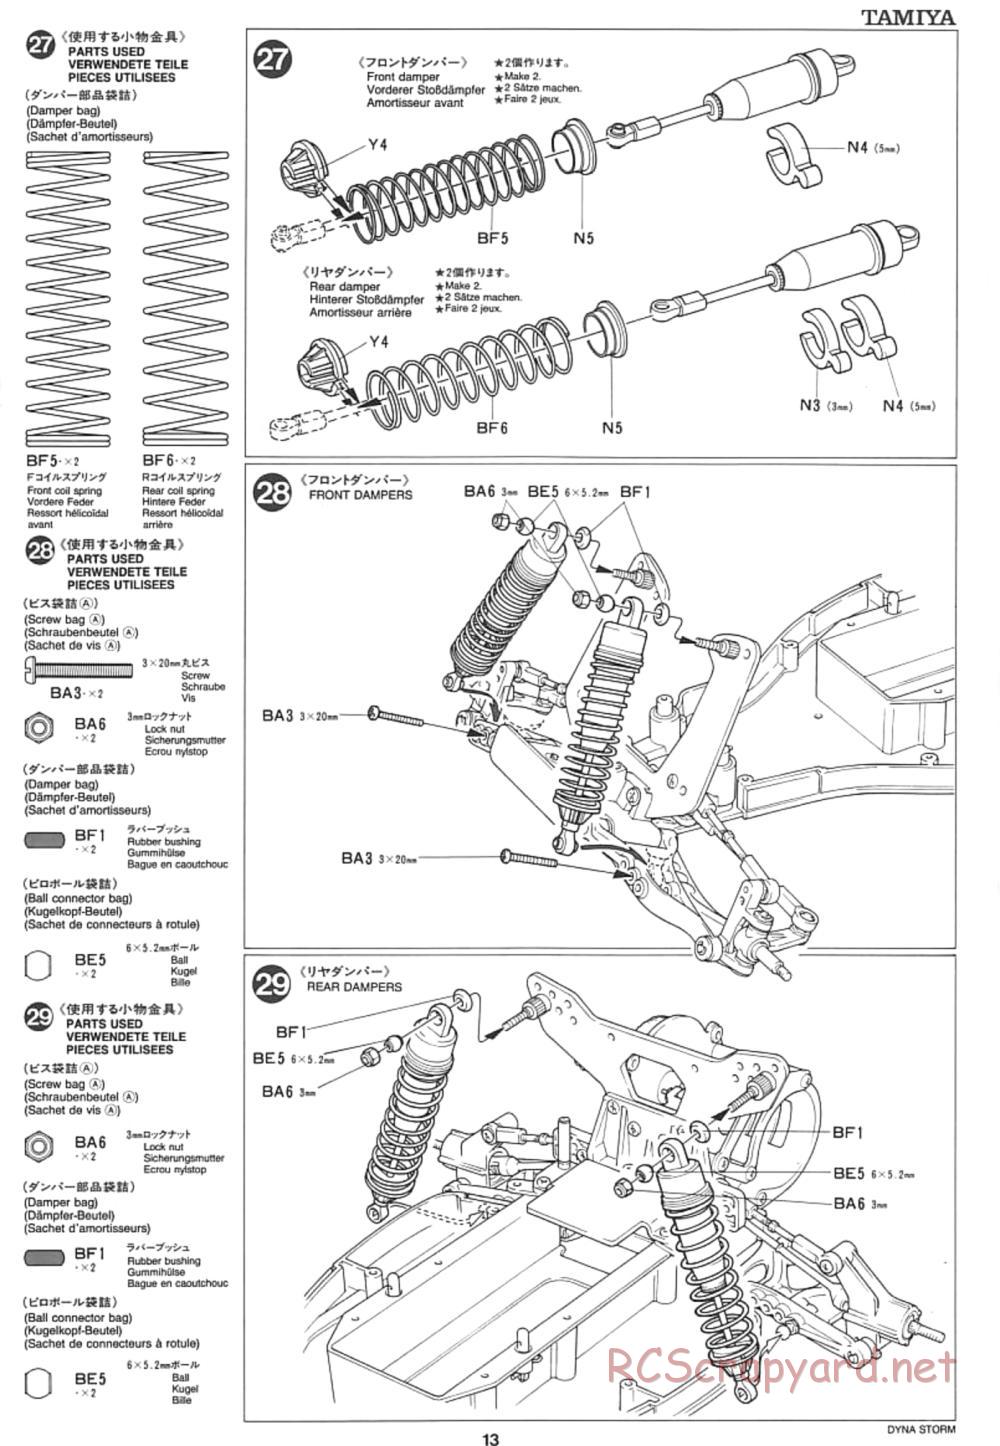 Tamiya - Dyna Storm Chassis - Manual - Page 13